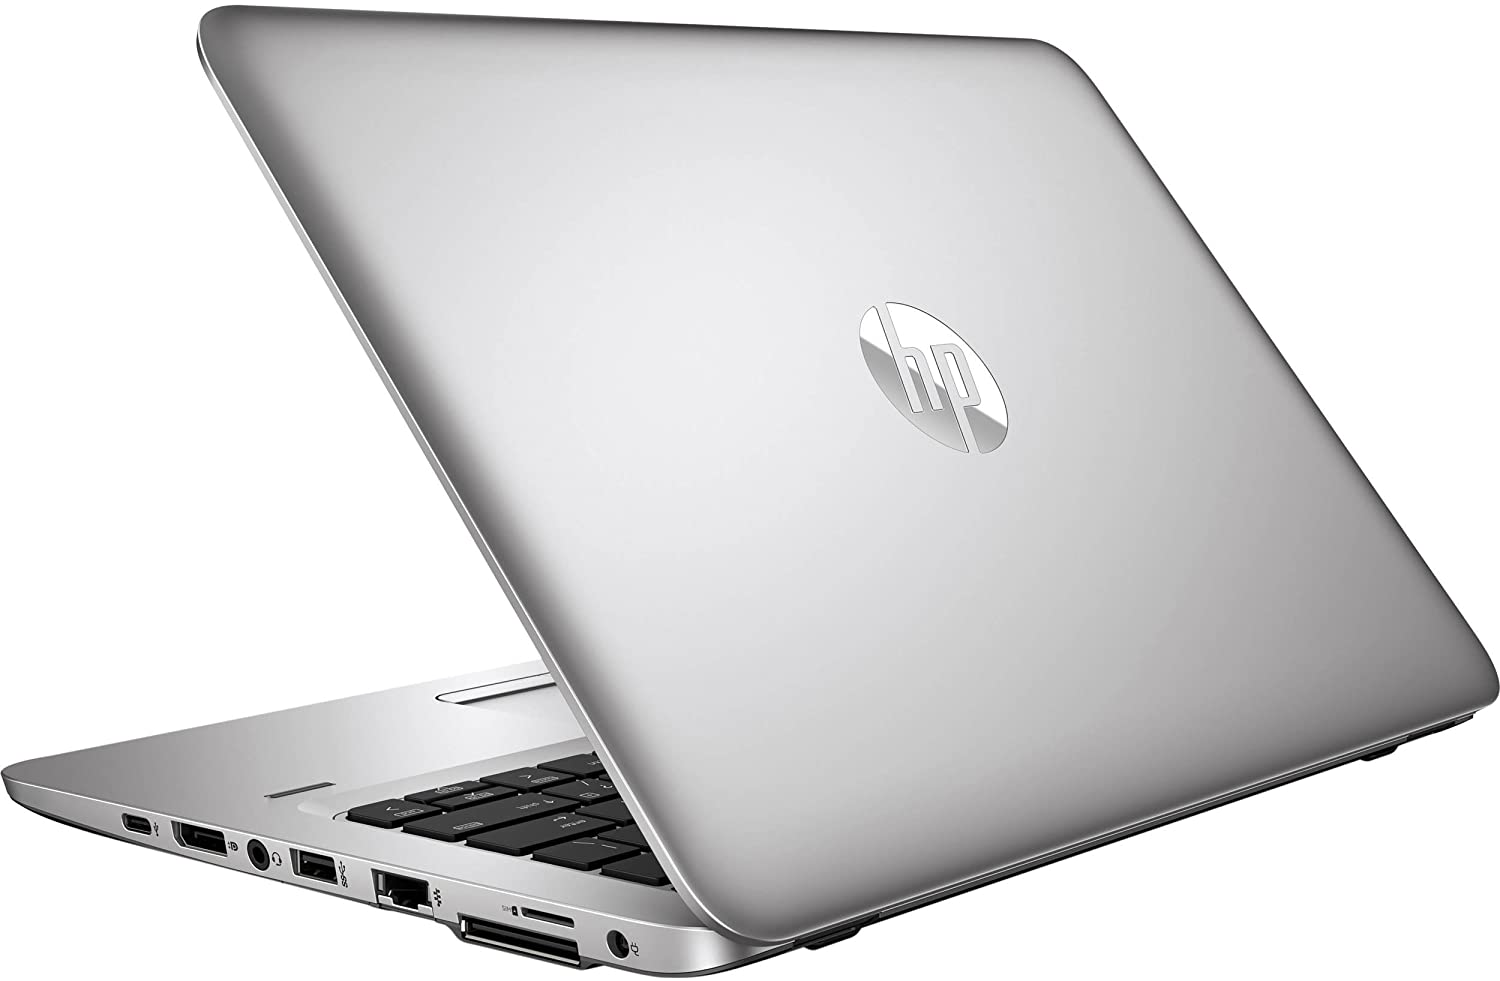 Ordinateur portable HP EliteBook 820 G1 12,5"remis à neuf (Intel Core i5-4300U 2,3 GHz/8 Go de RAM/128 Go de SSD/Windows 10)